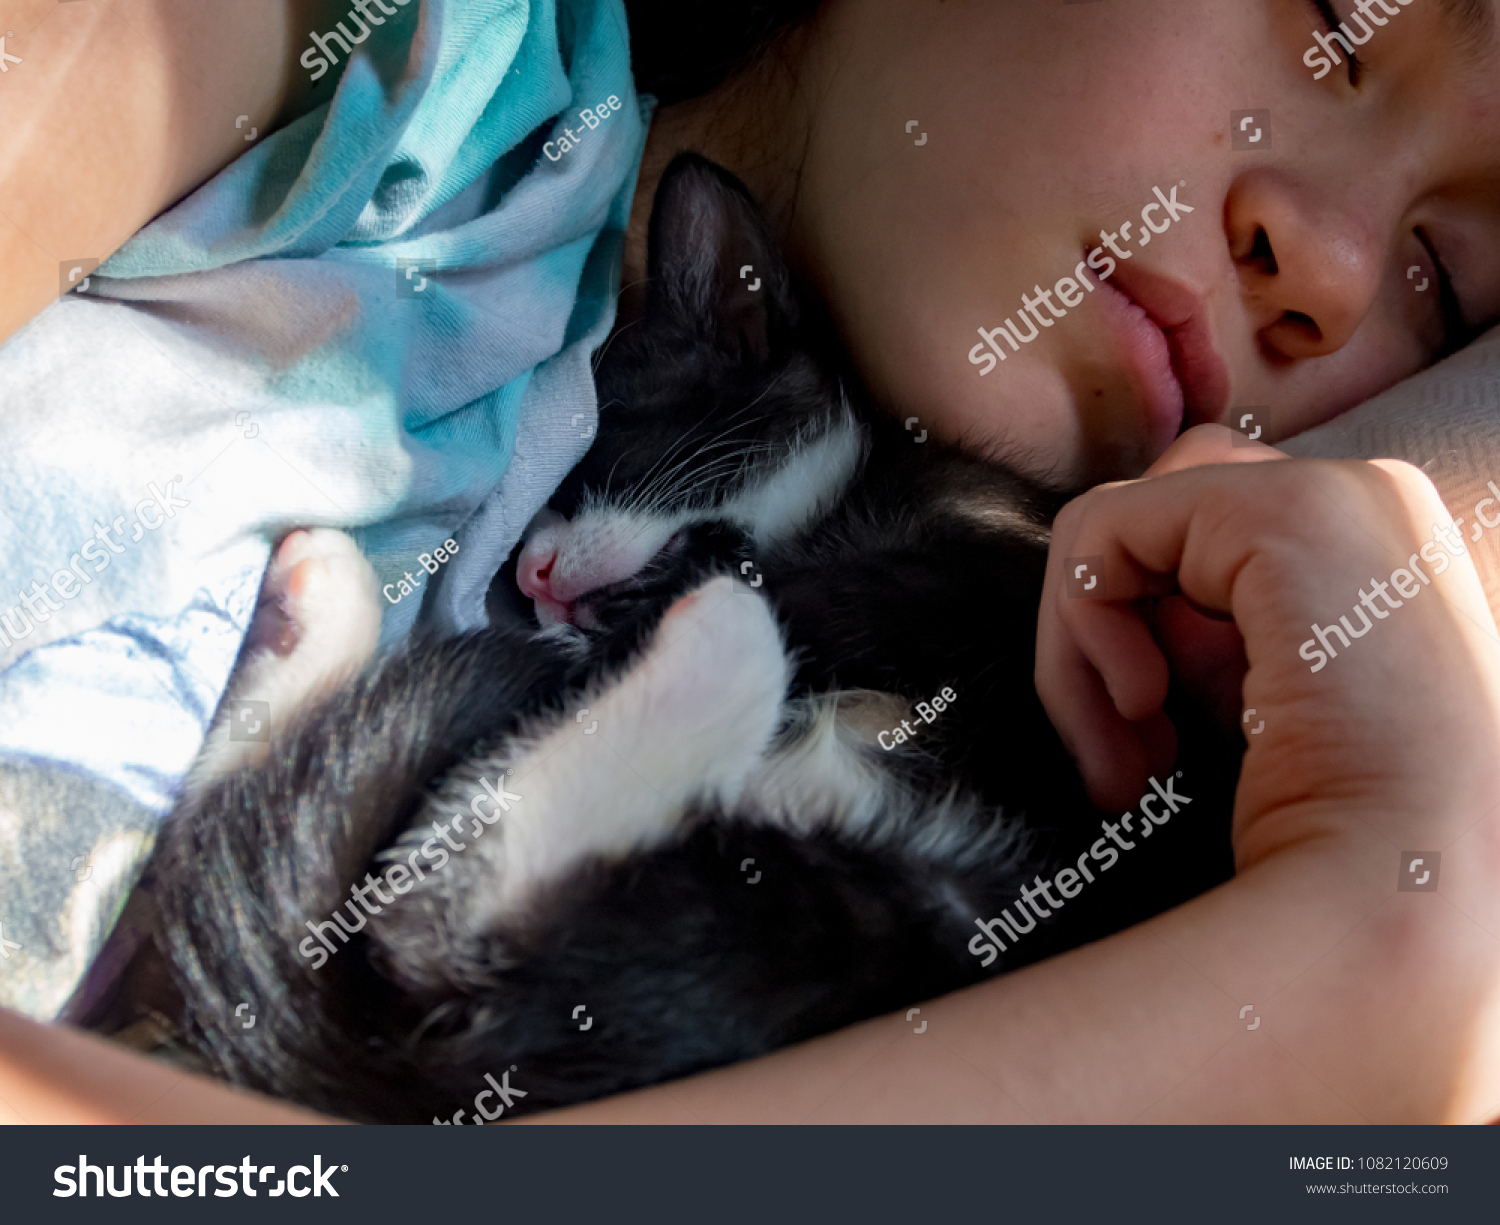 Teenage girl and black and white kitten snuggled up sleeping. #1082120609